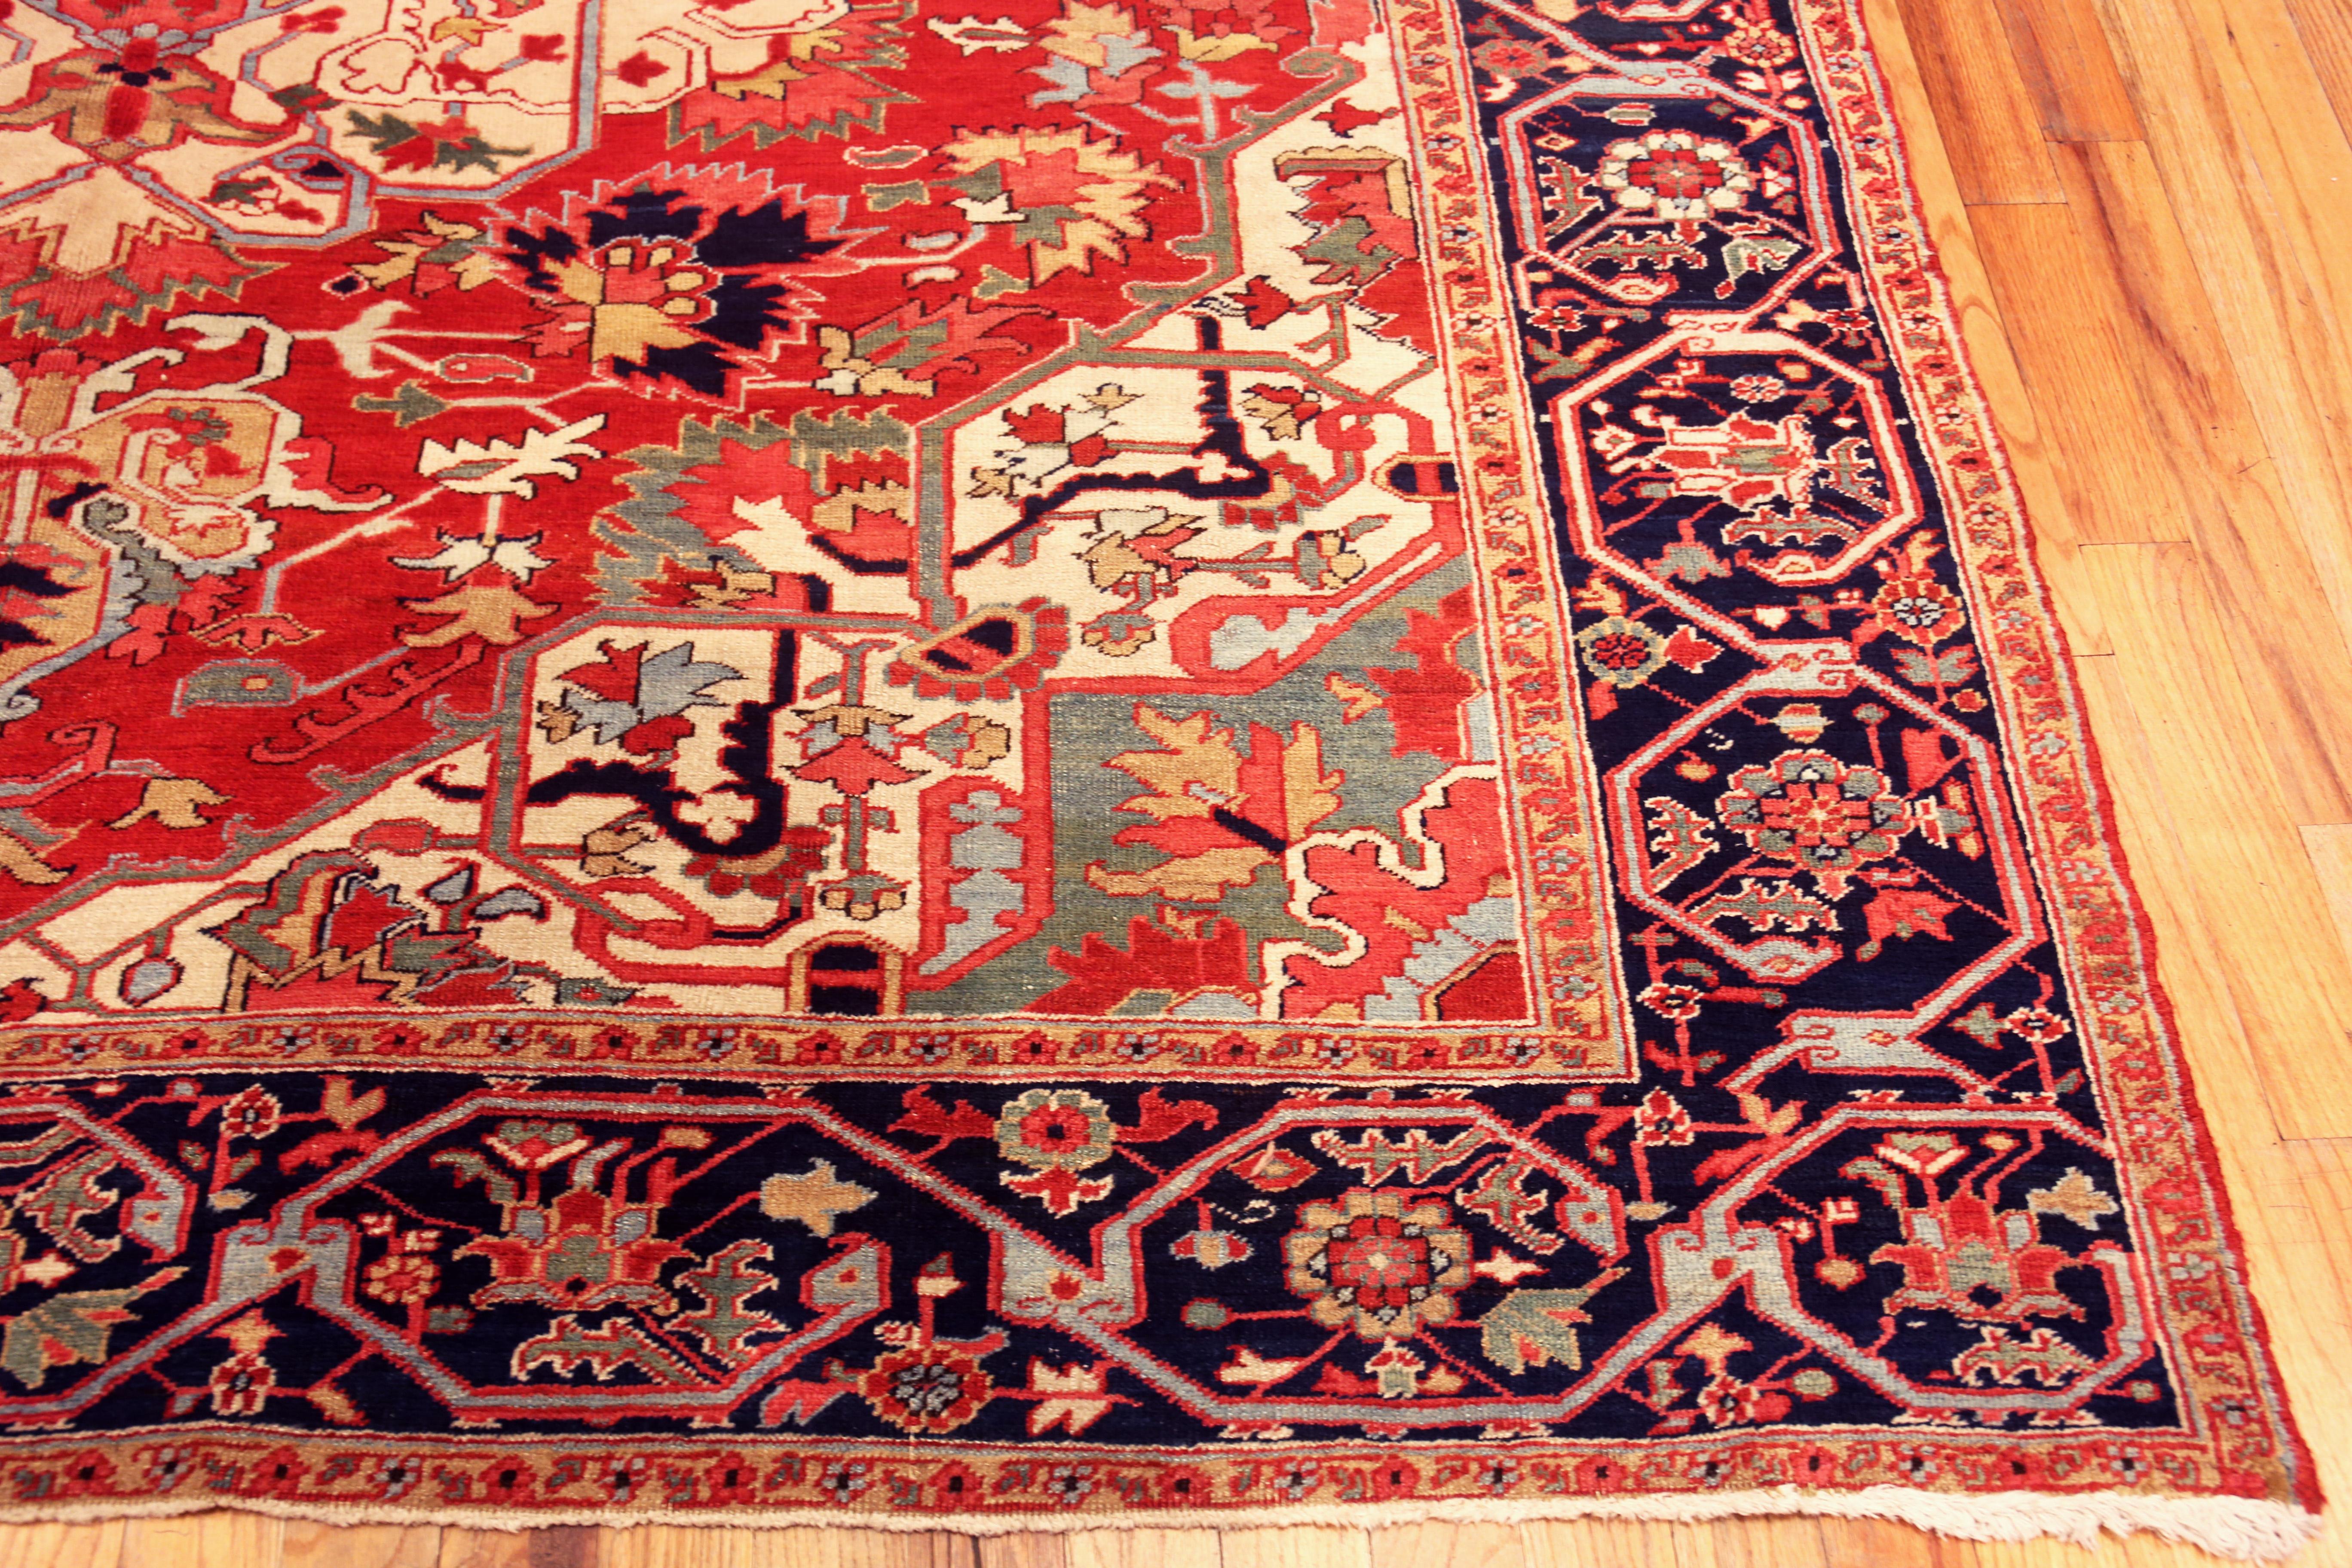 Breathtaking Square Antique Persian Serapi Area Rug, Country of origin: Persian Rugs, Circa date: 1900

